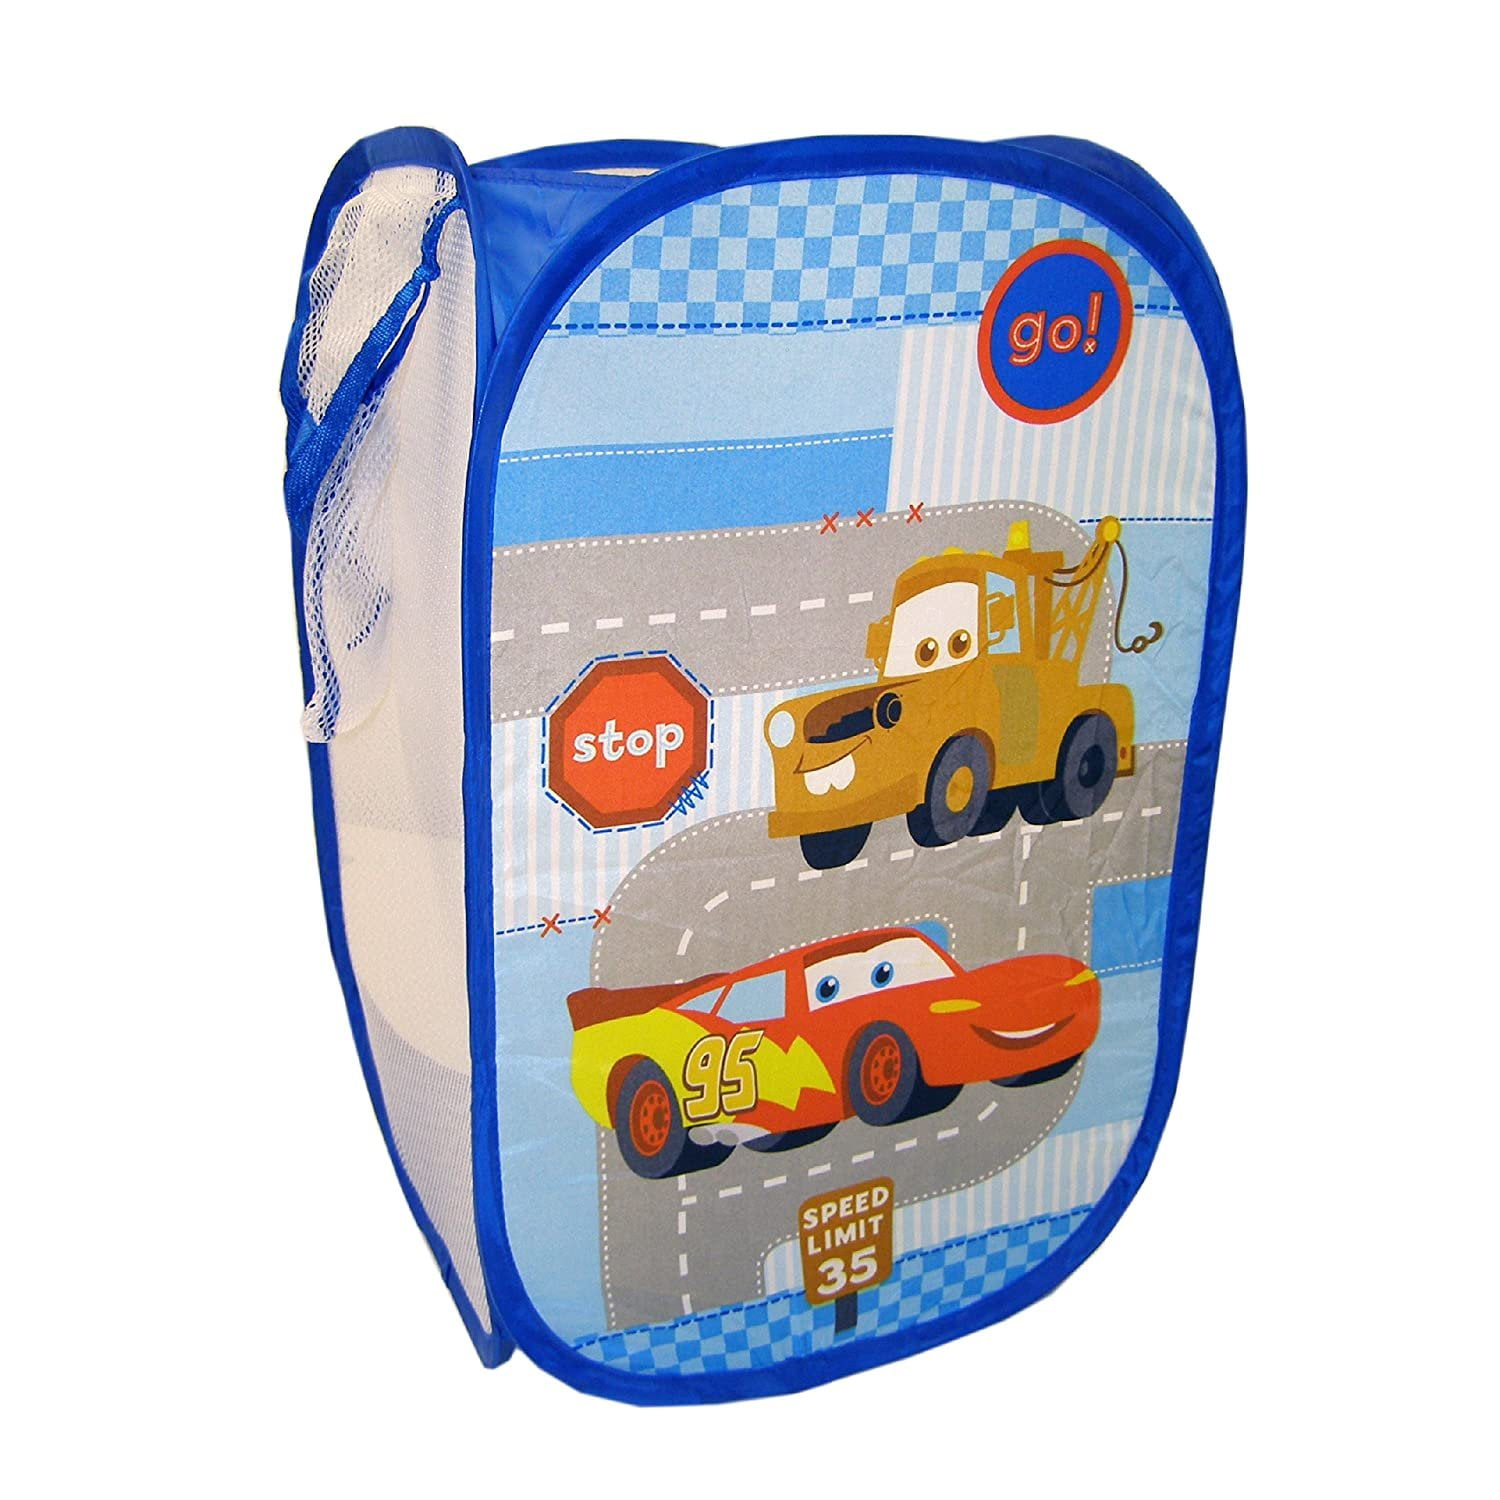 Details about   Disney Cars Frozen Minnie Pop Up Mesh Hamper Laundry Tidy Toy Kids Storage Bag 